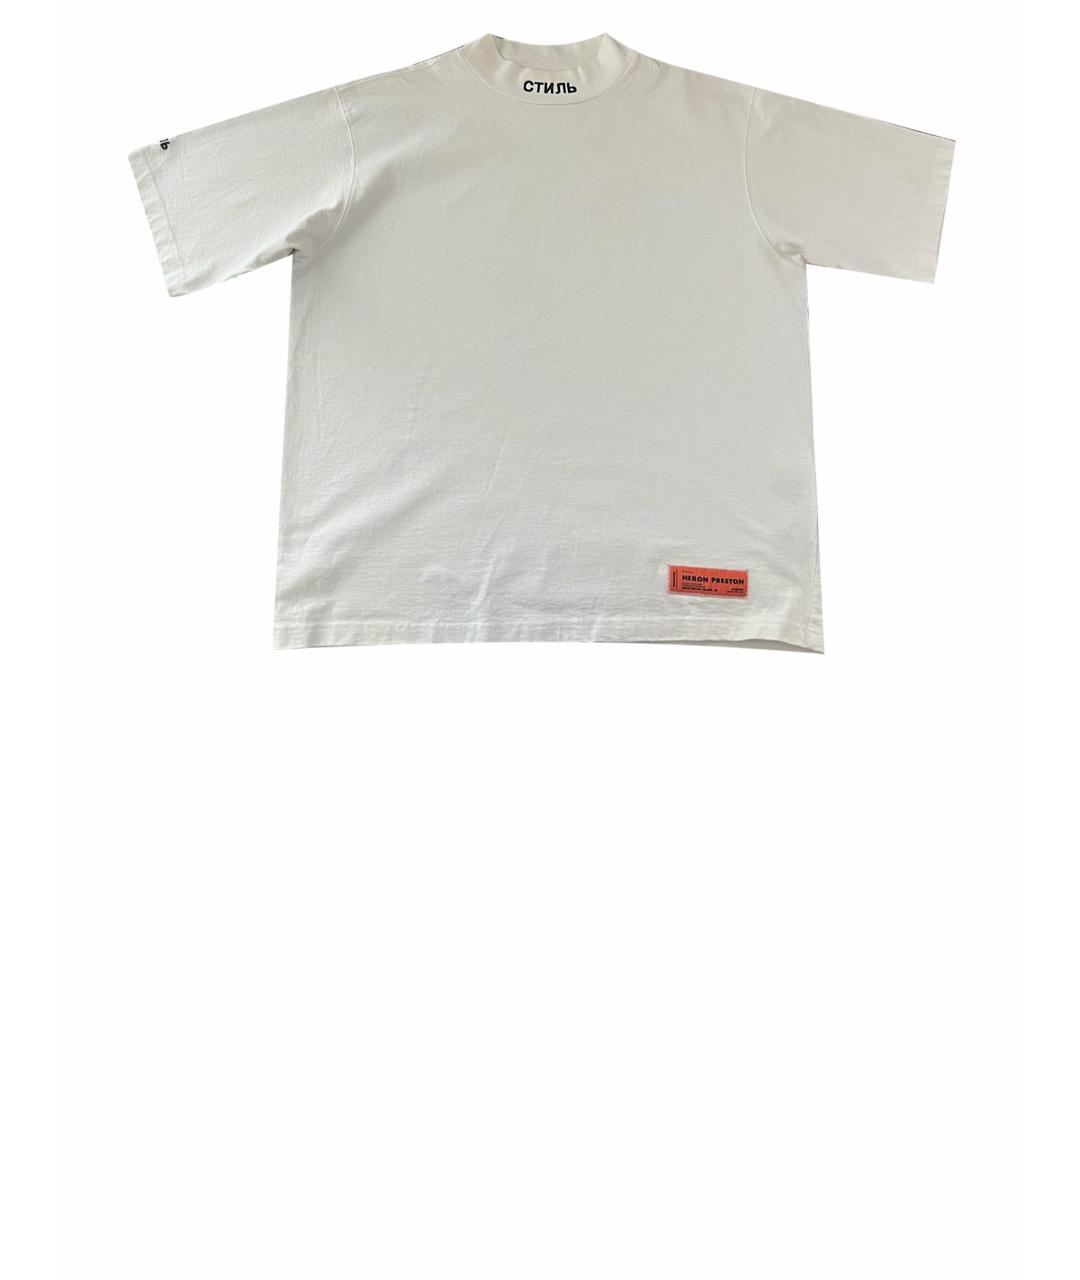 HERON PRESTON Белая хлопковая футболка, фото 1